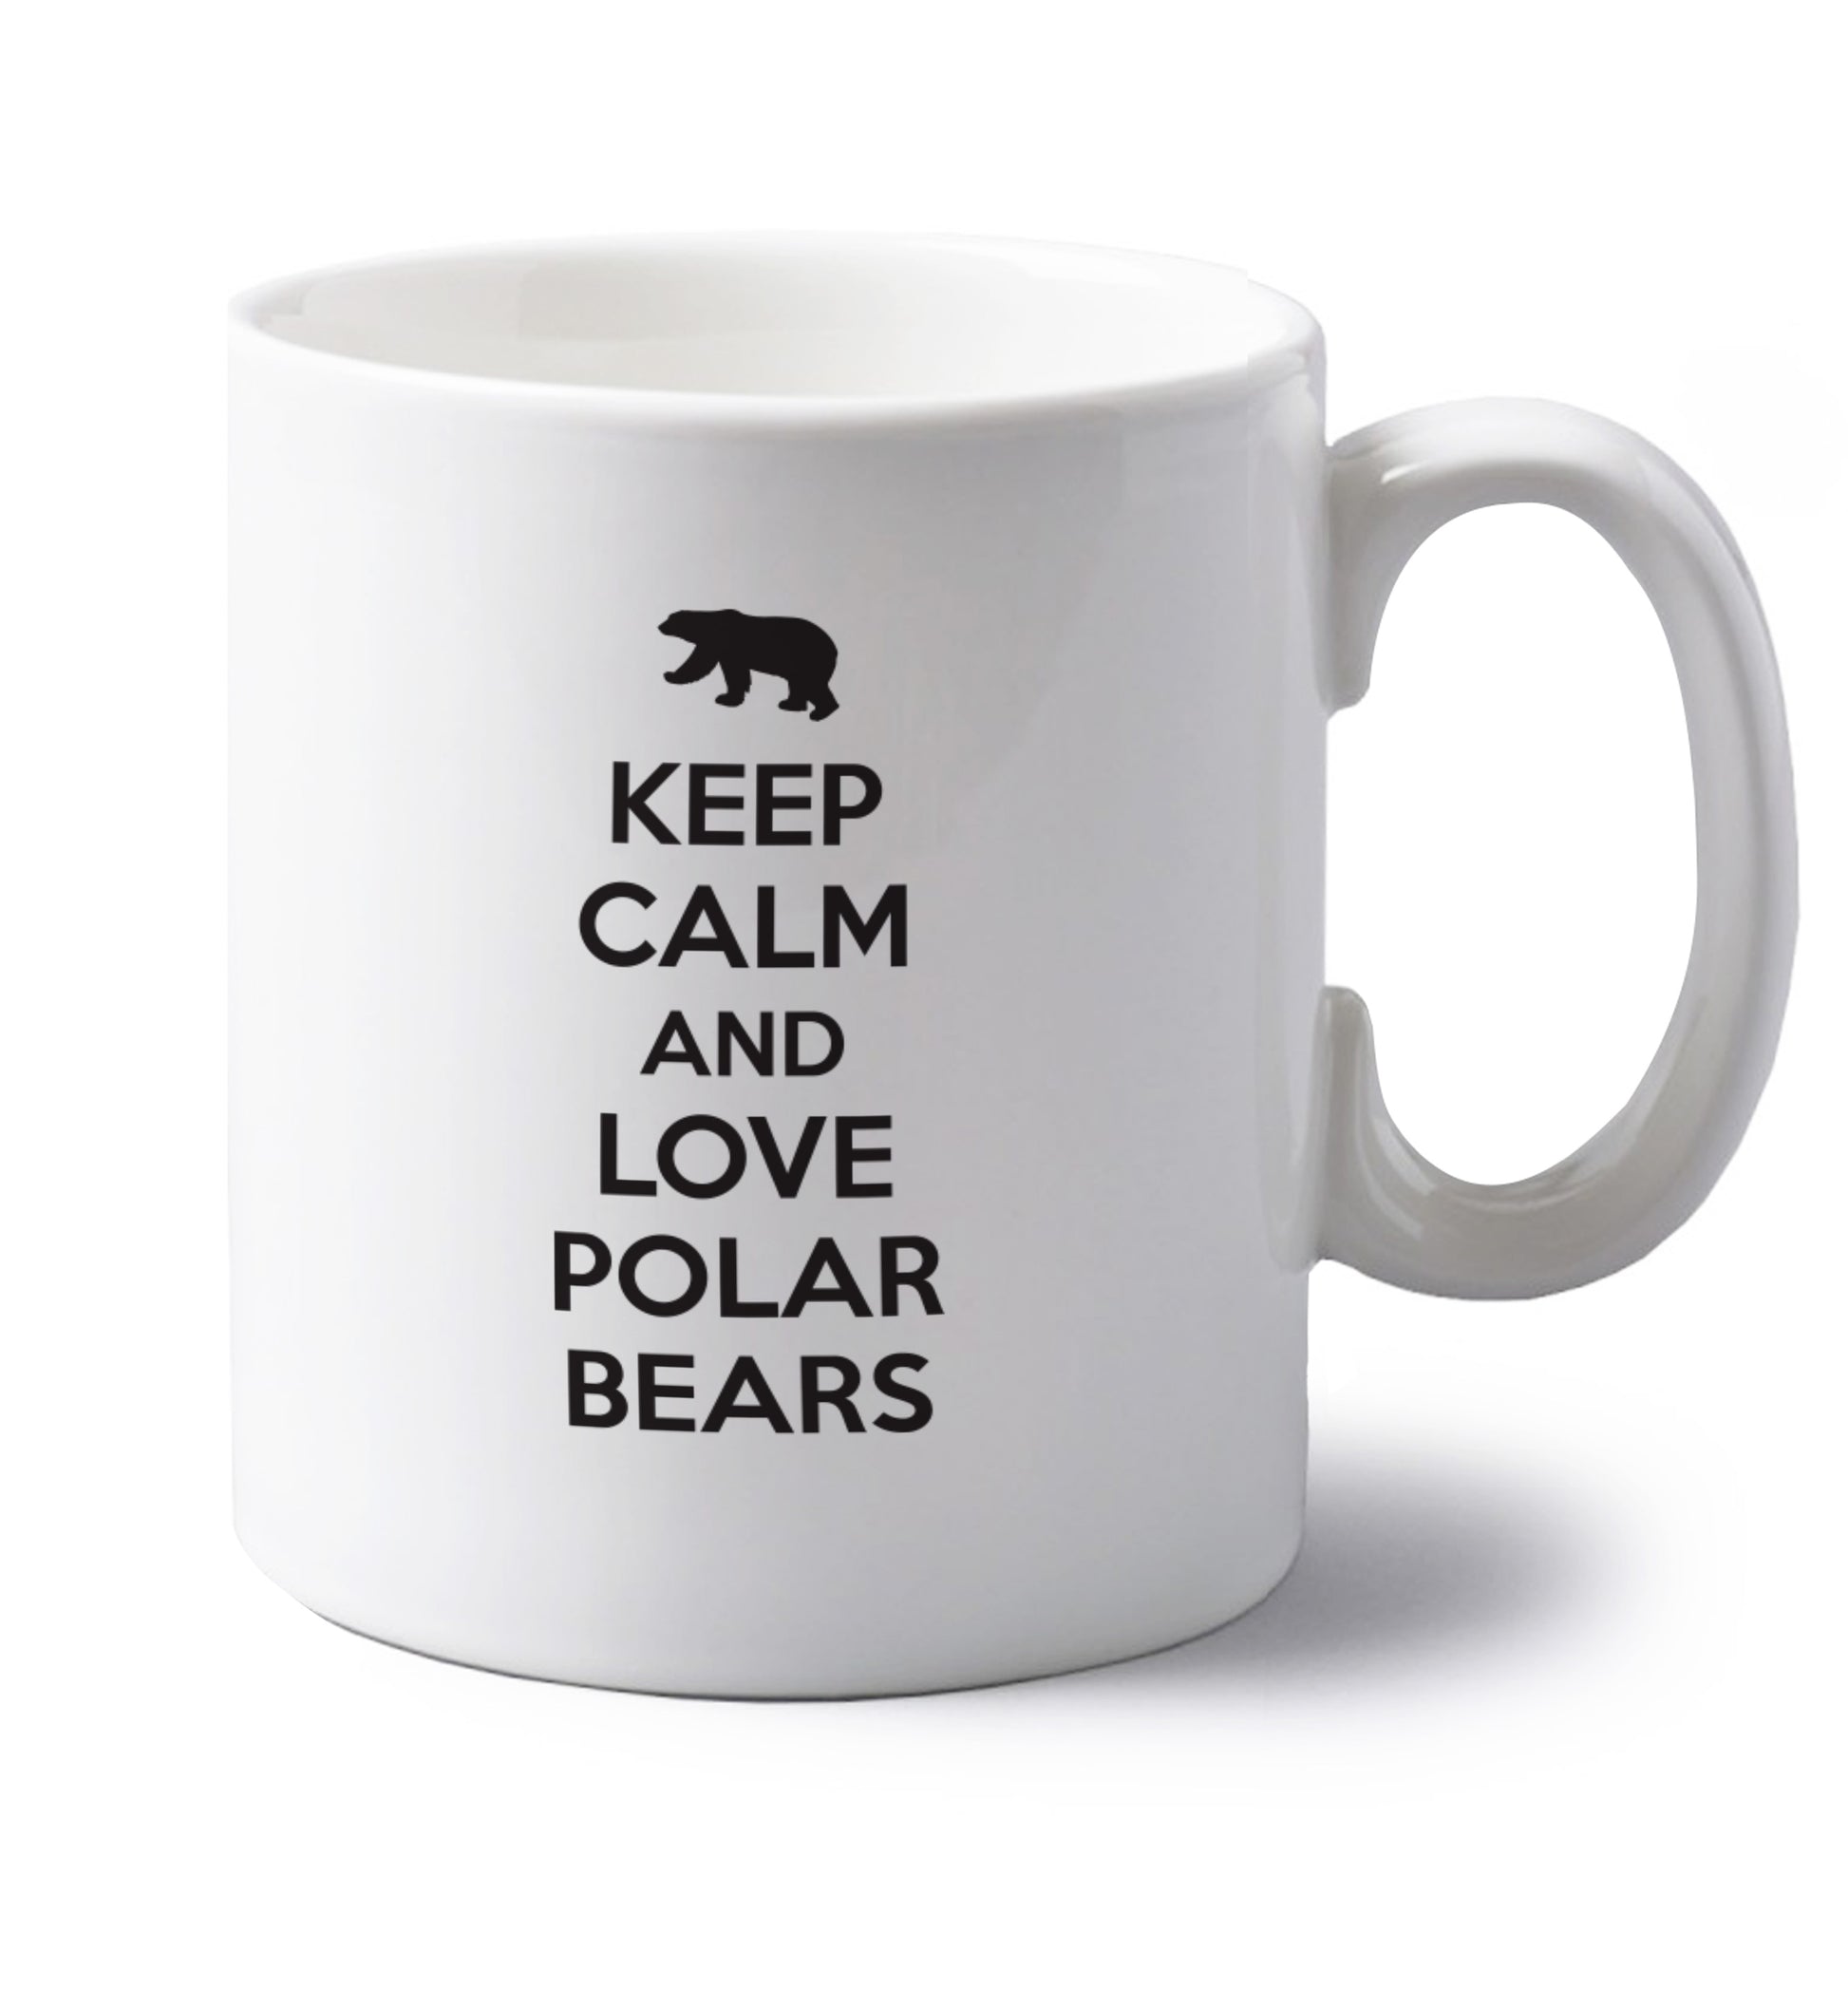 Keep calm and love polar bears left handed white ceramic mug 